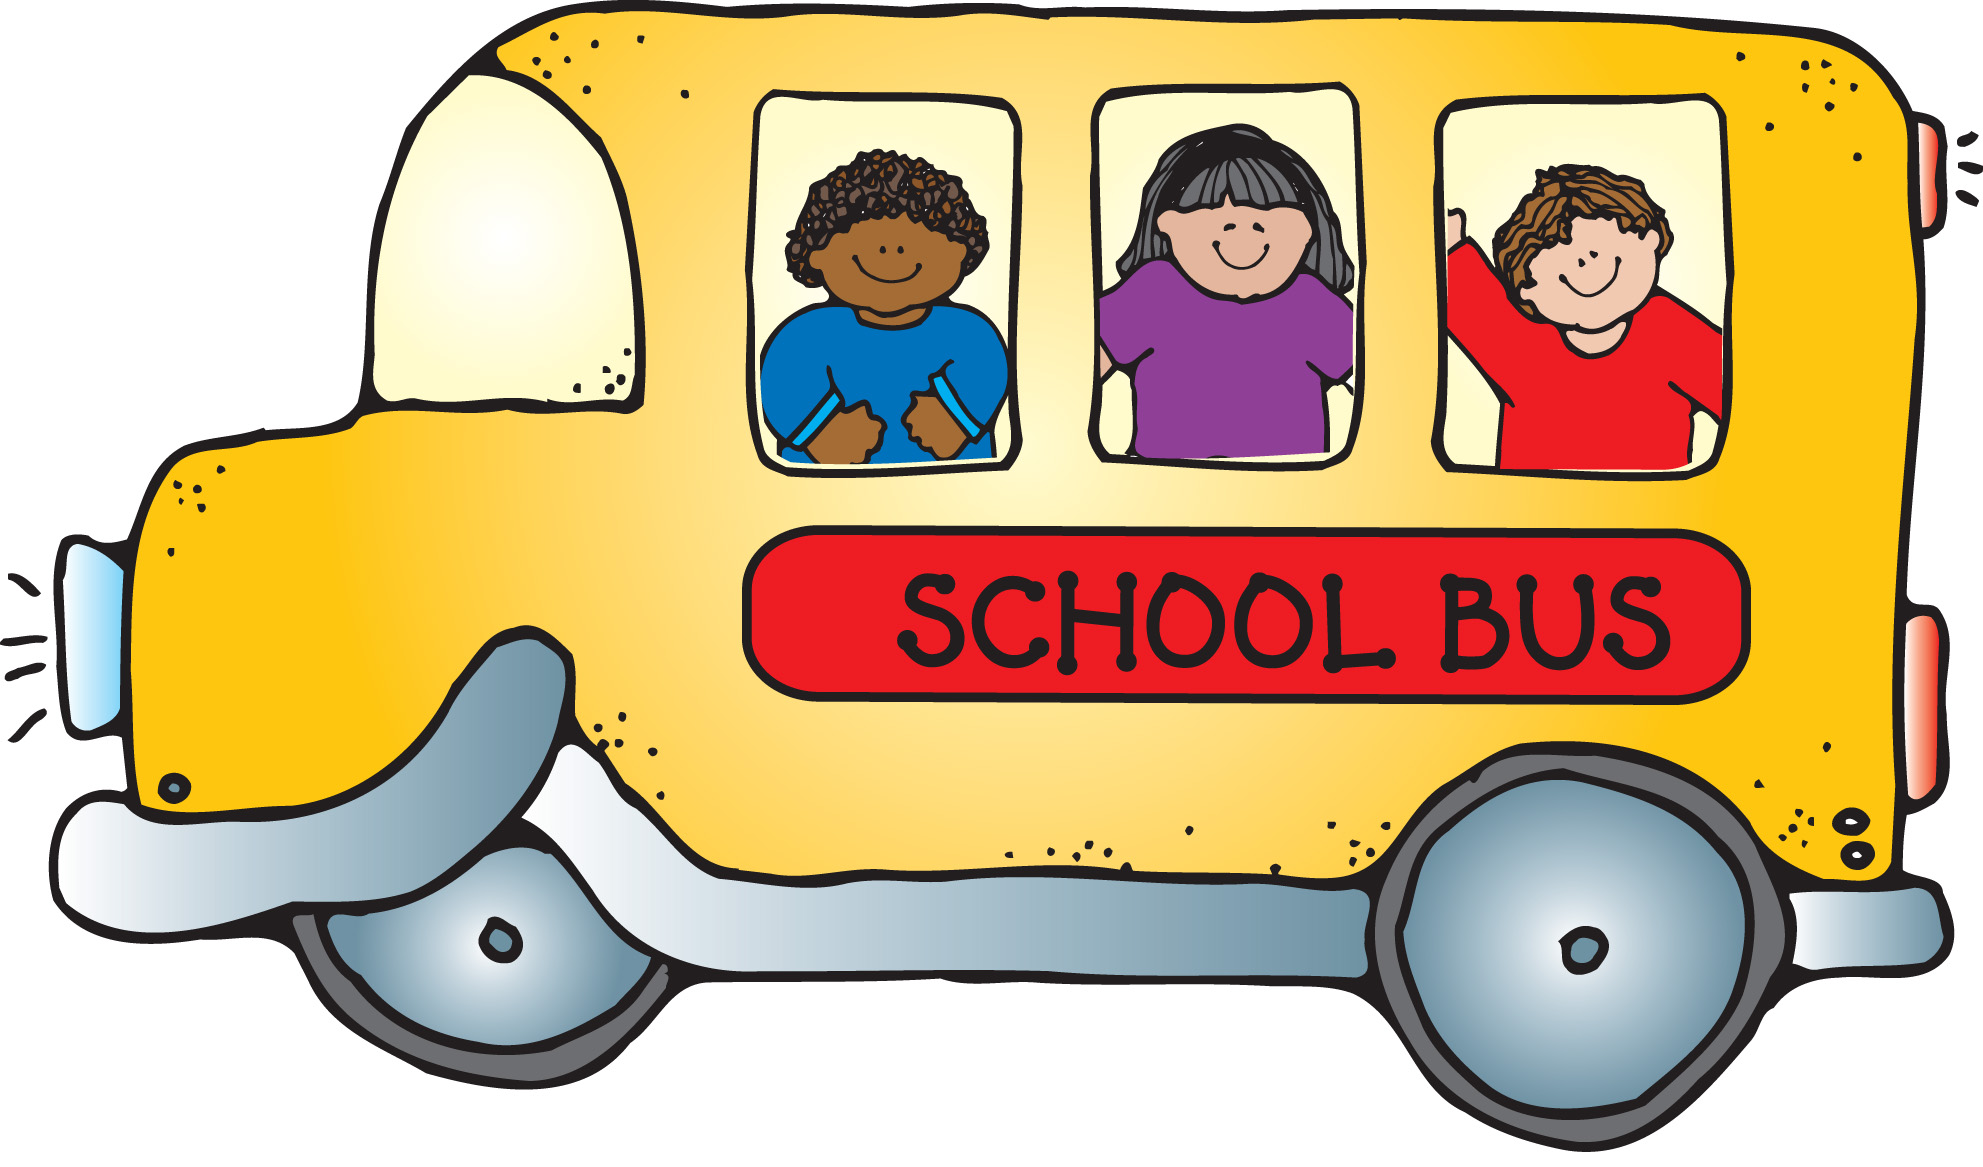 School bus clipart wikiclipart